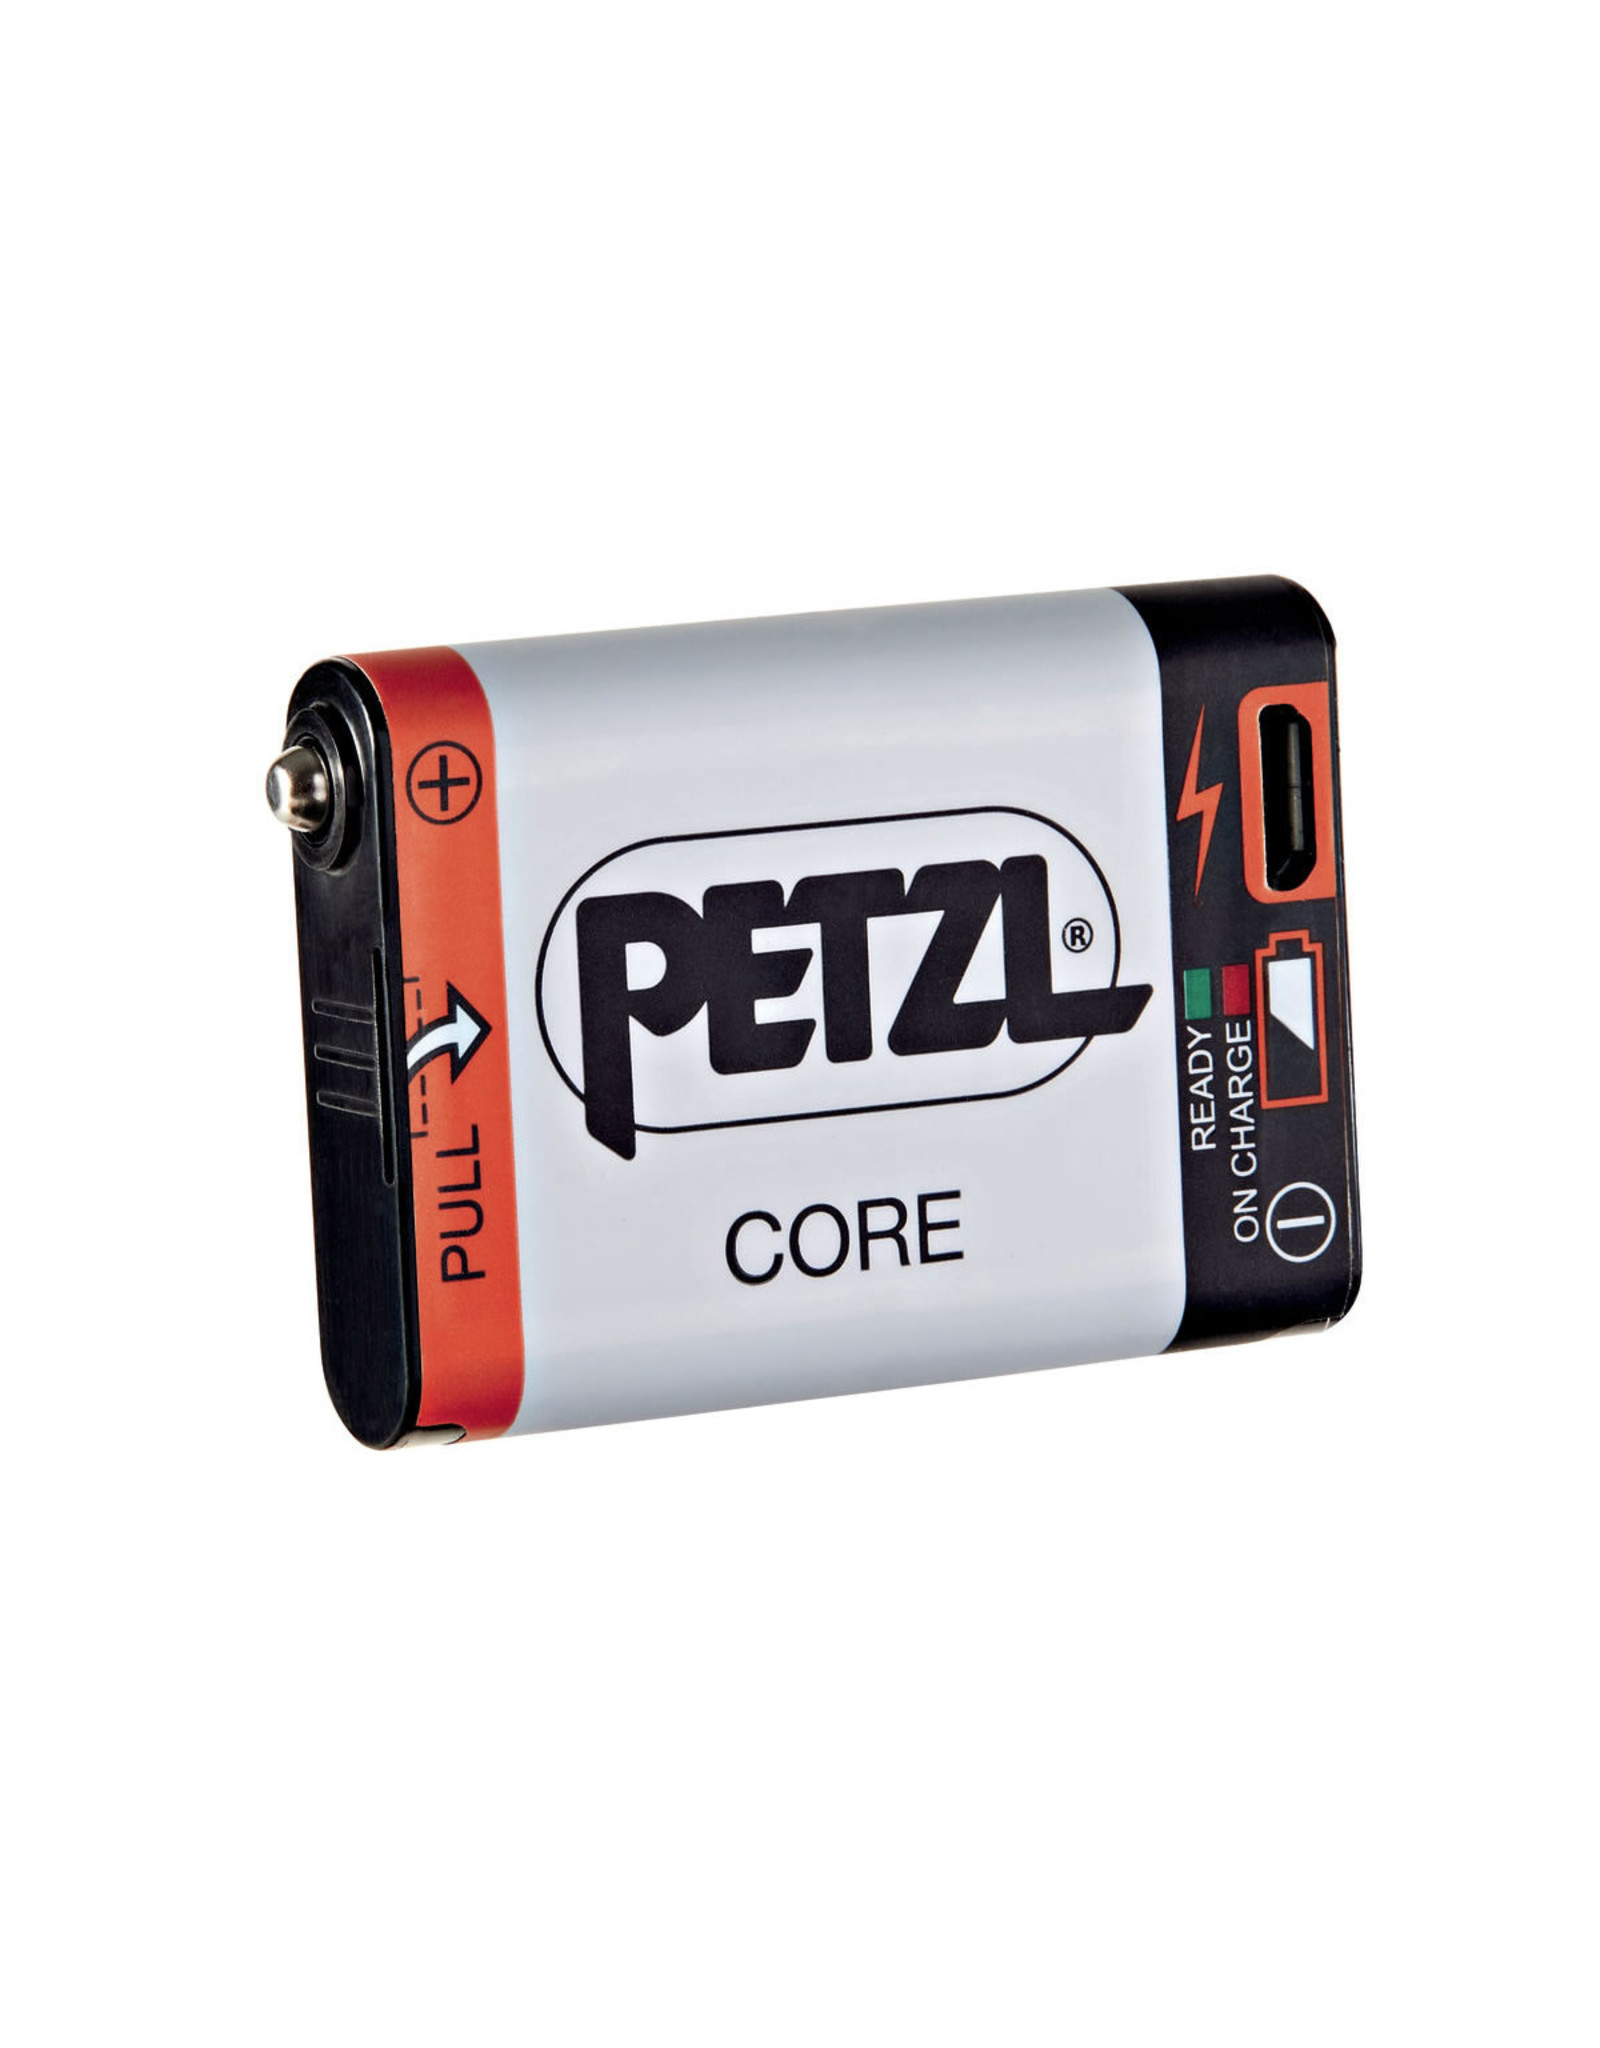 Petzl Petzl Accu Core Battery